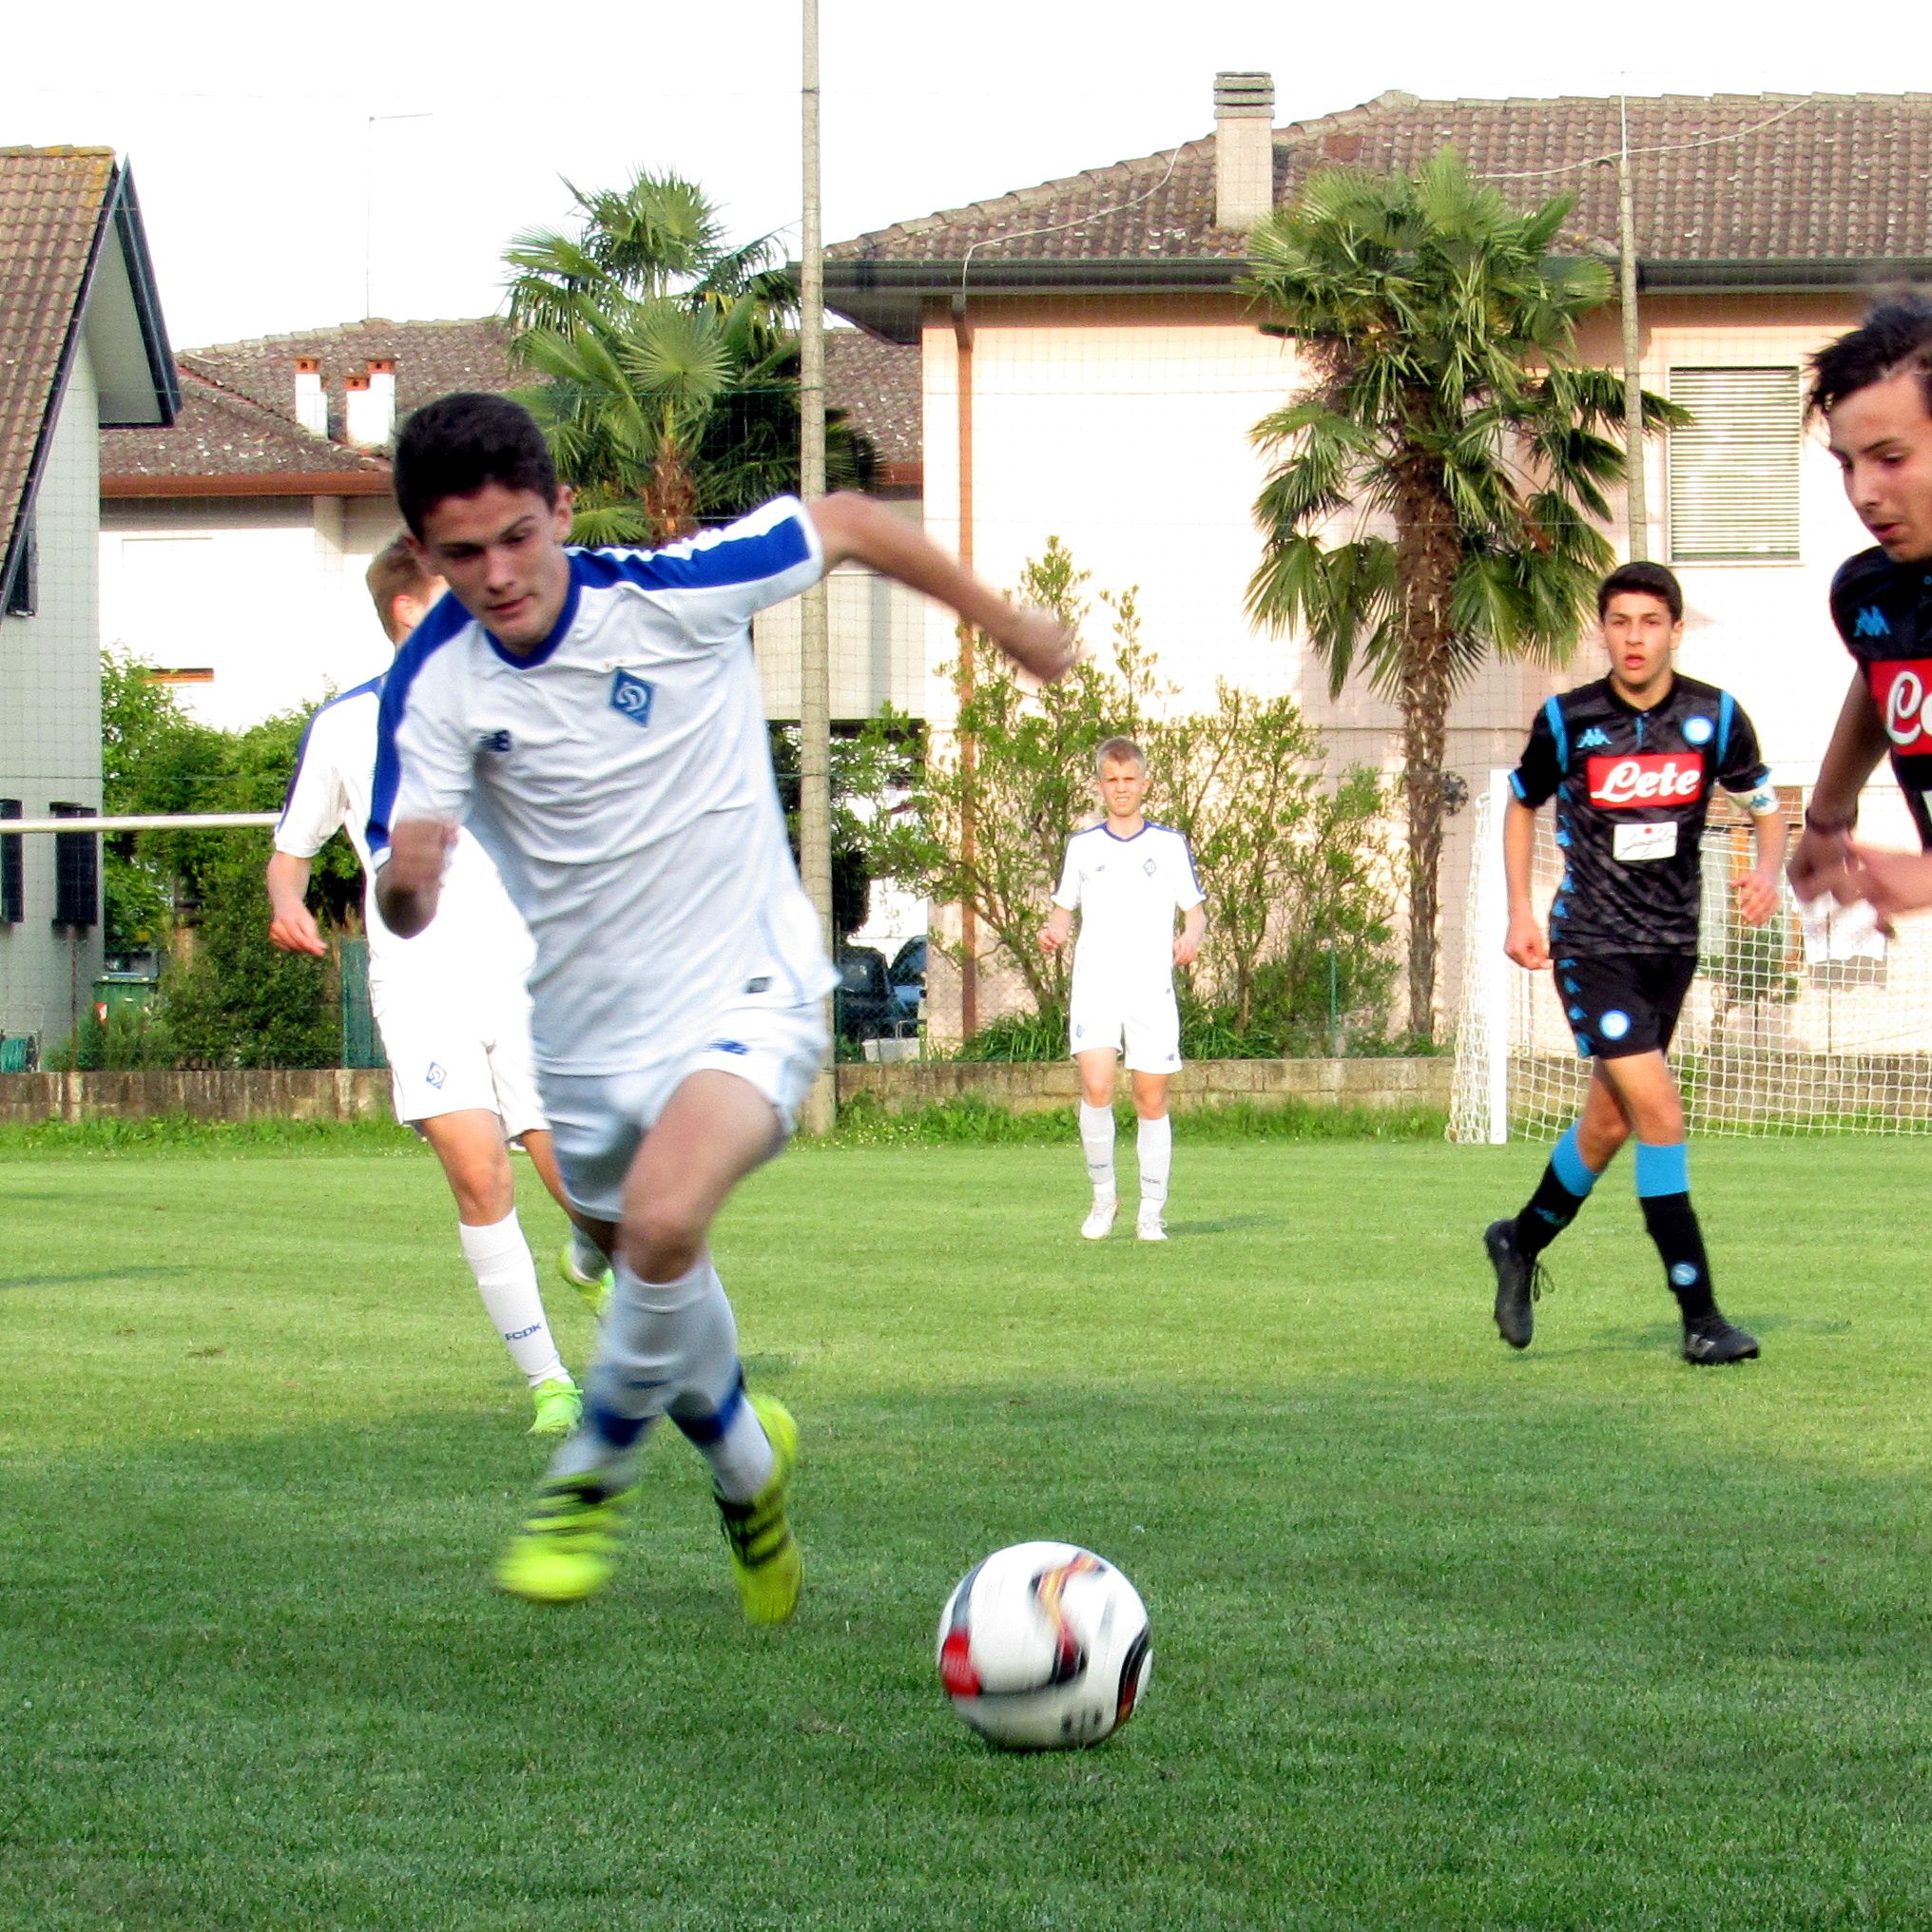 U-14. Abano Football Trophy. Dynamo – Napoli – 1:1 (video)